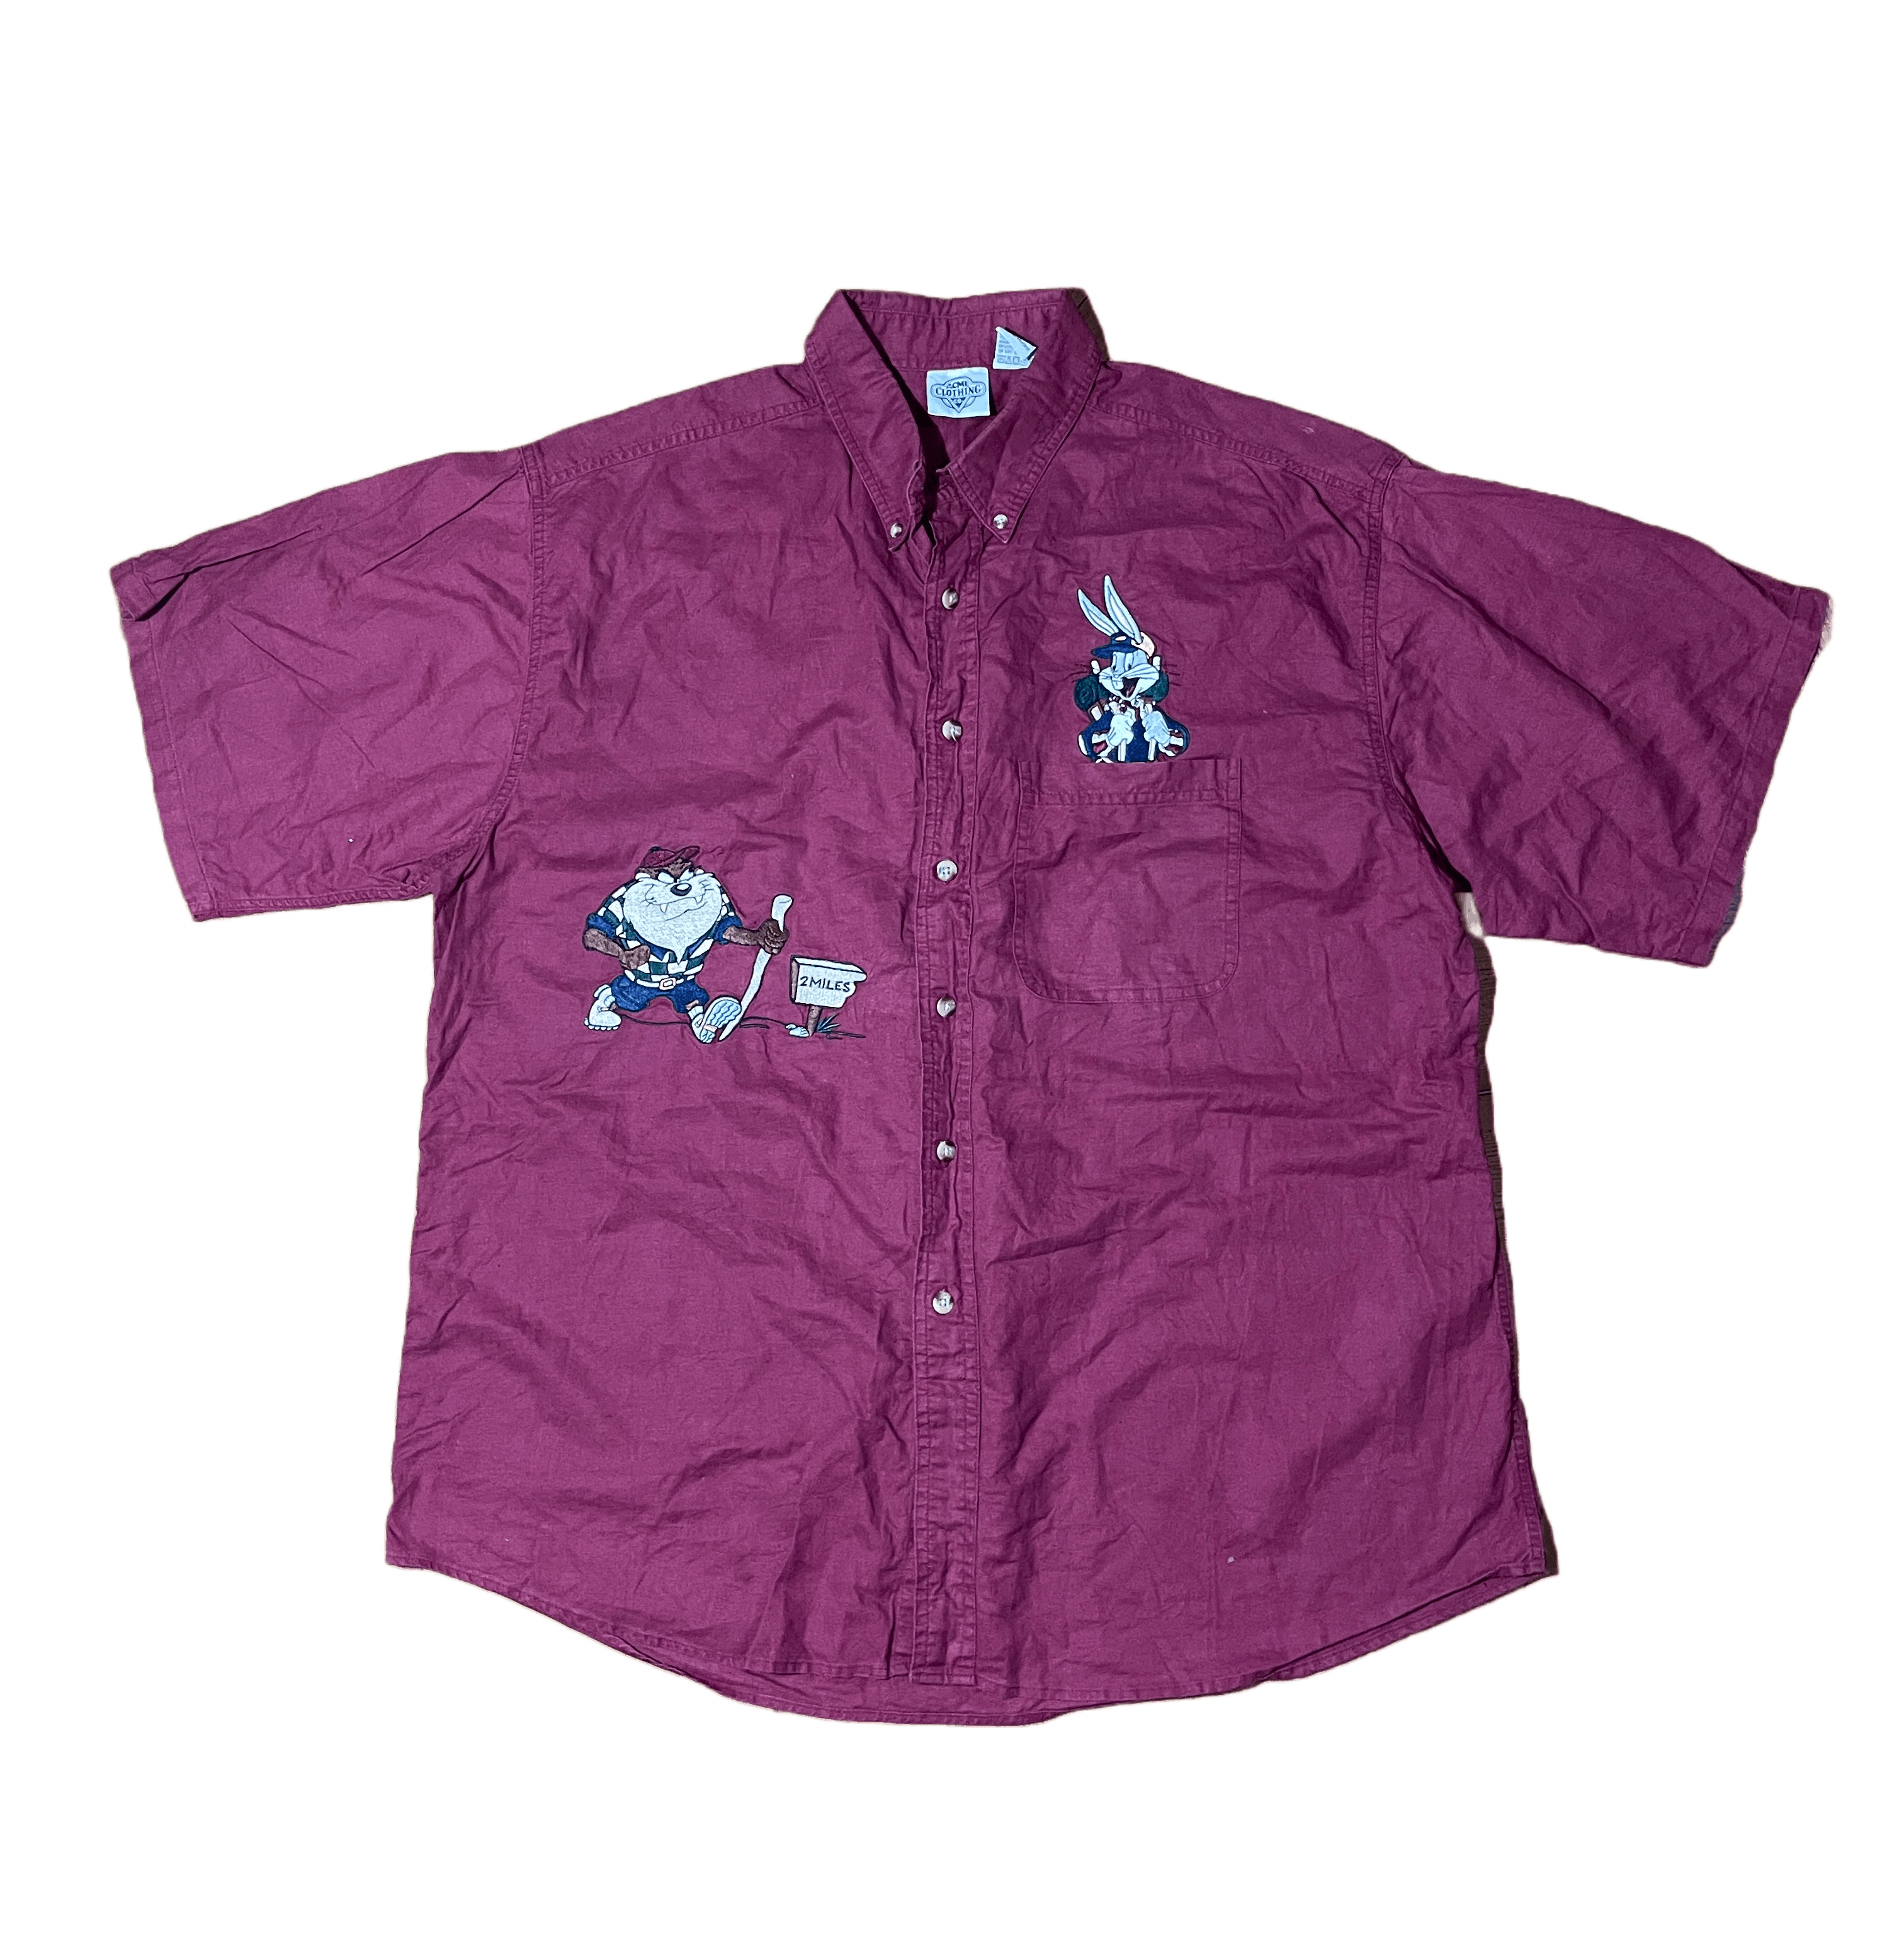 Vintage ACME Clothing Bugz Bunny Vintage shirt short sleeve Rare Size US XL / EU 56 / 4 - 1 Preview